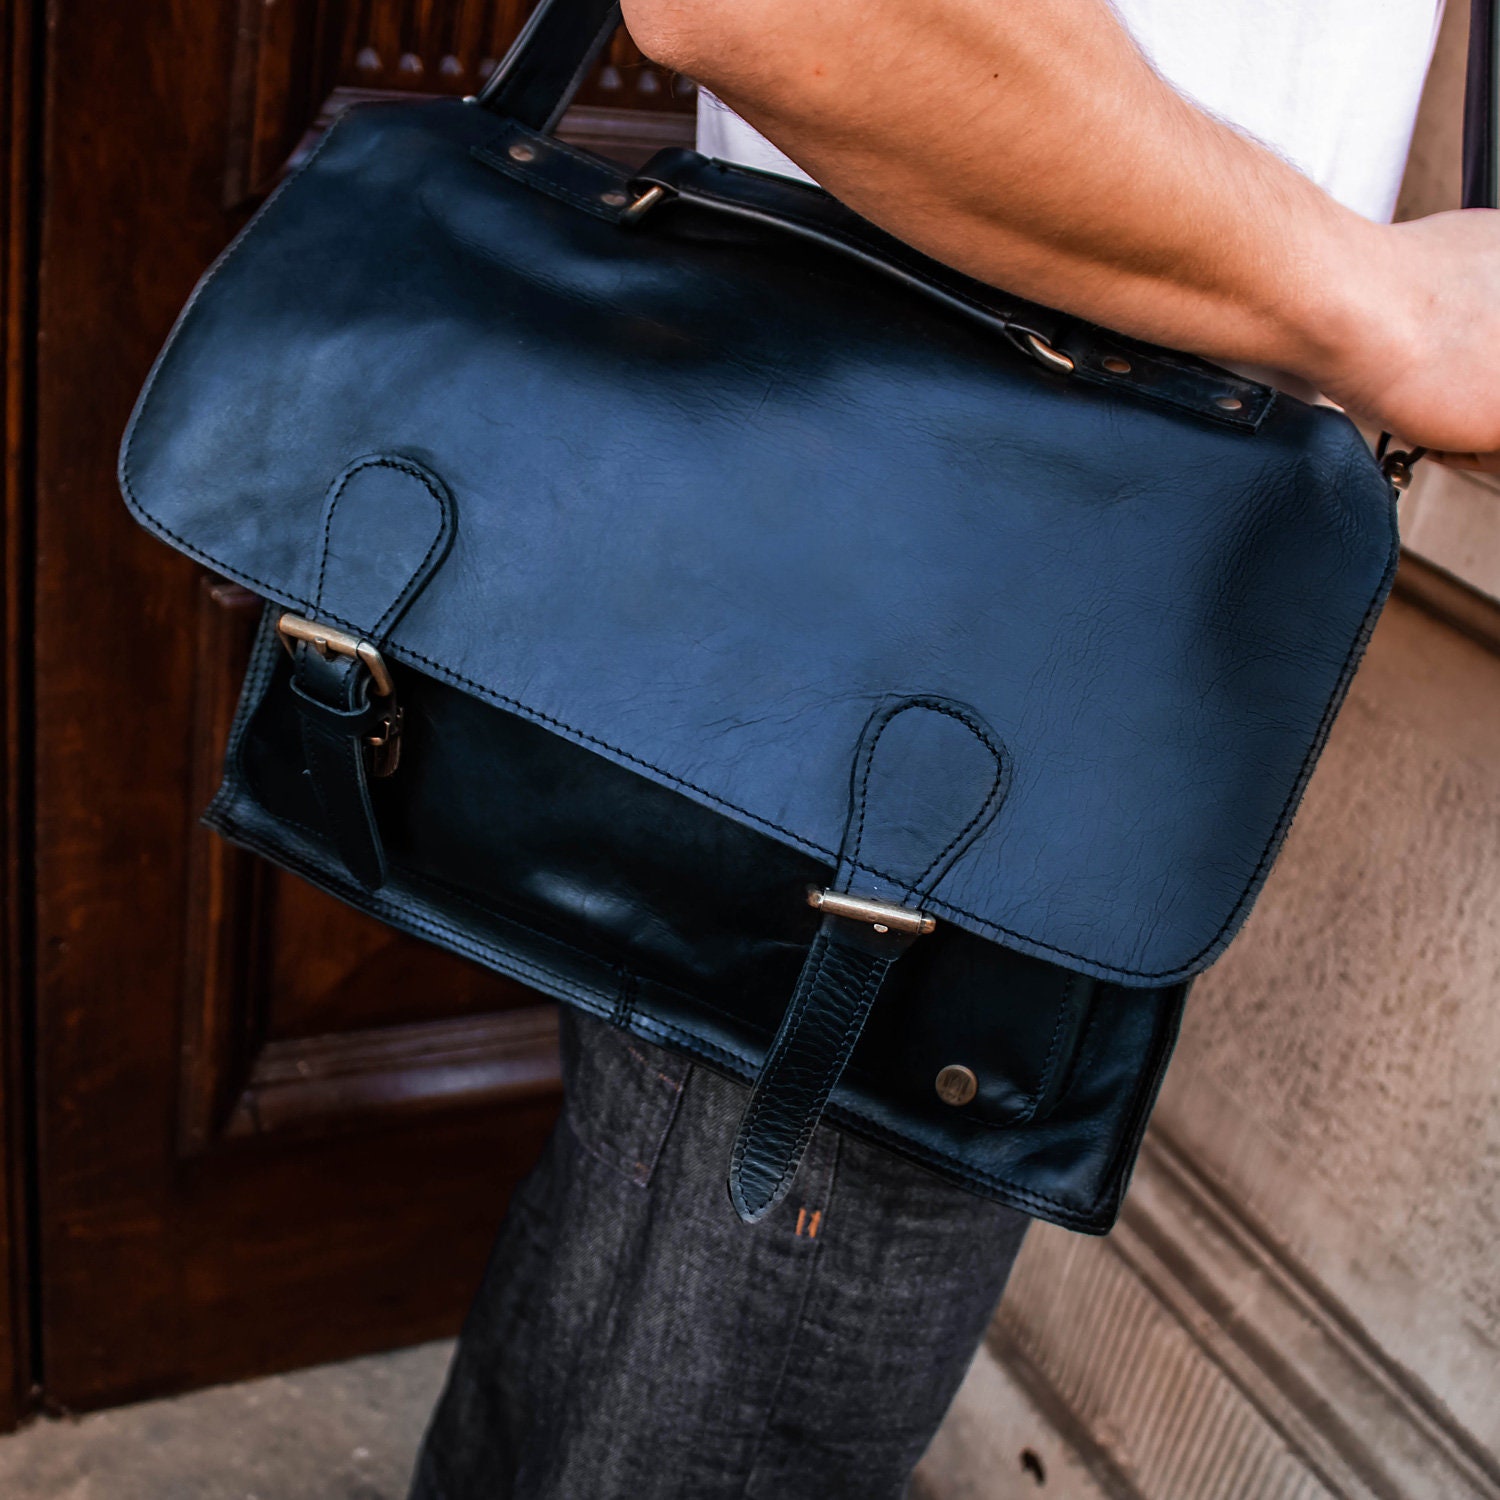 Postman bag Éclair M - Navy blue/Pain brûlé - Messenger bag - Made